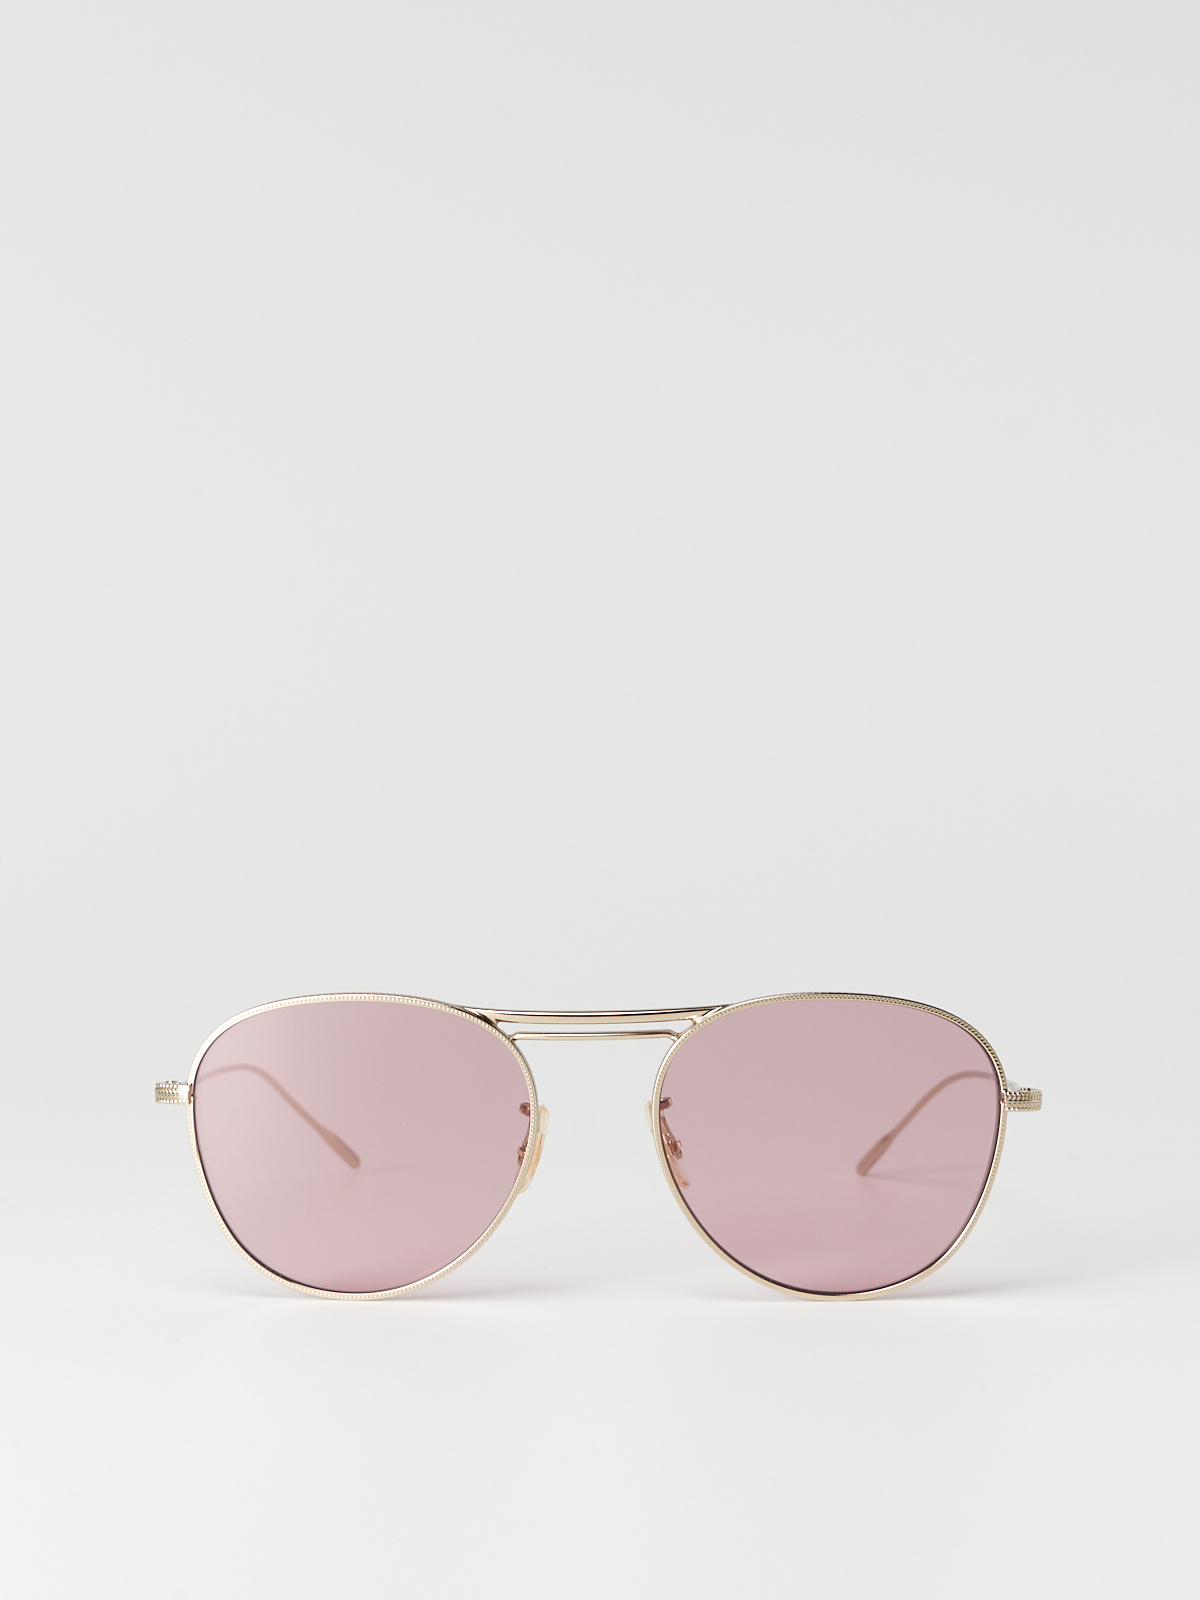 Oliver Peoples [OV1226S] Cade gold / pink wash lenses | Hello Glasses